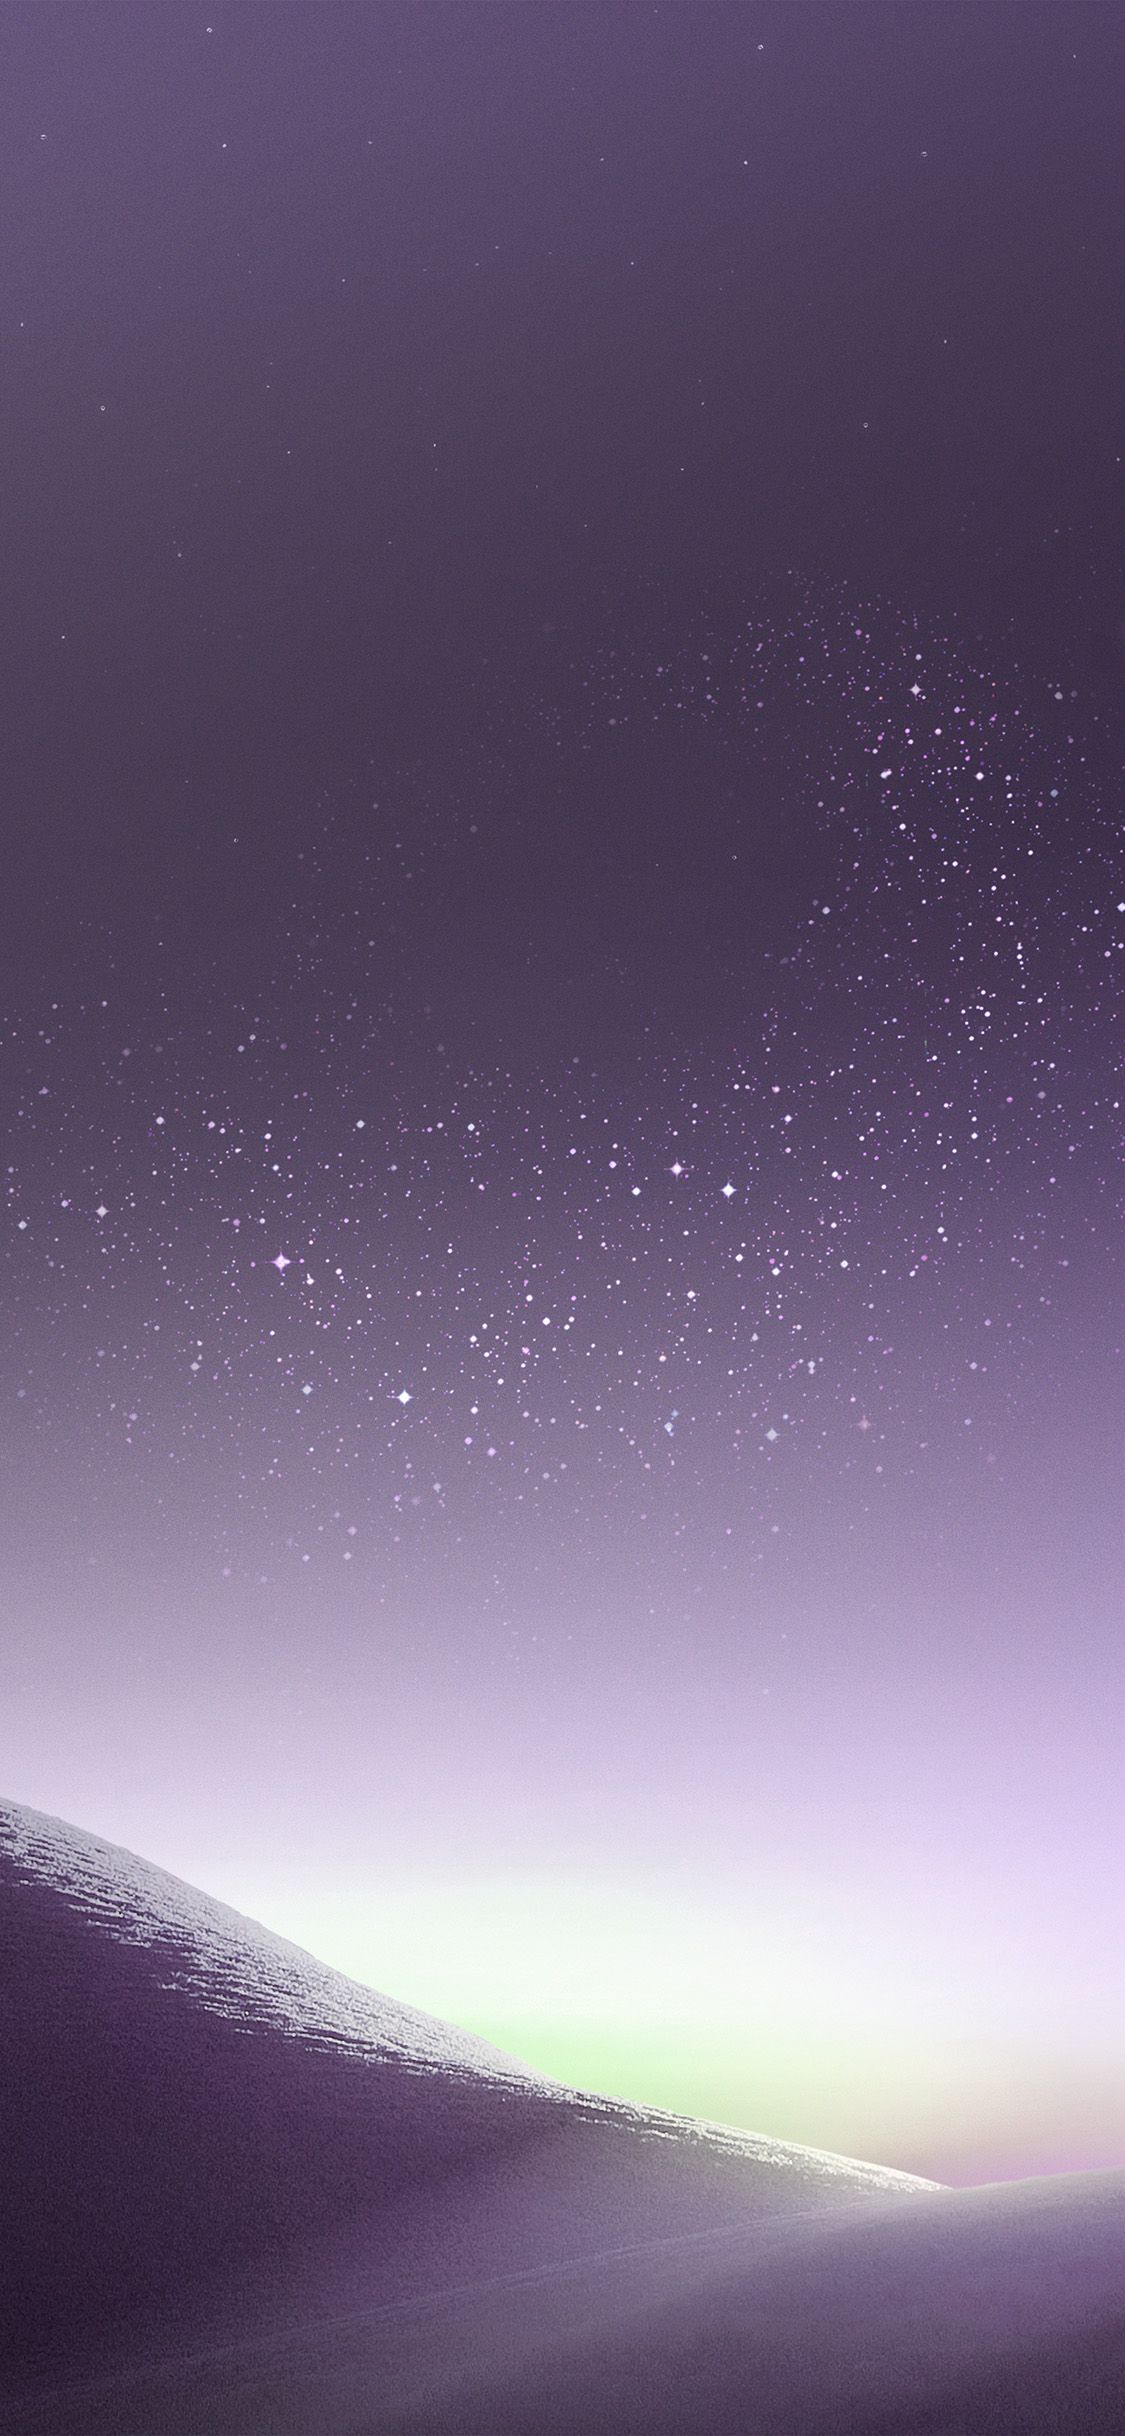 galaxy night sky star art illustration samsung purple